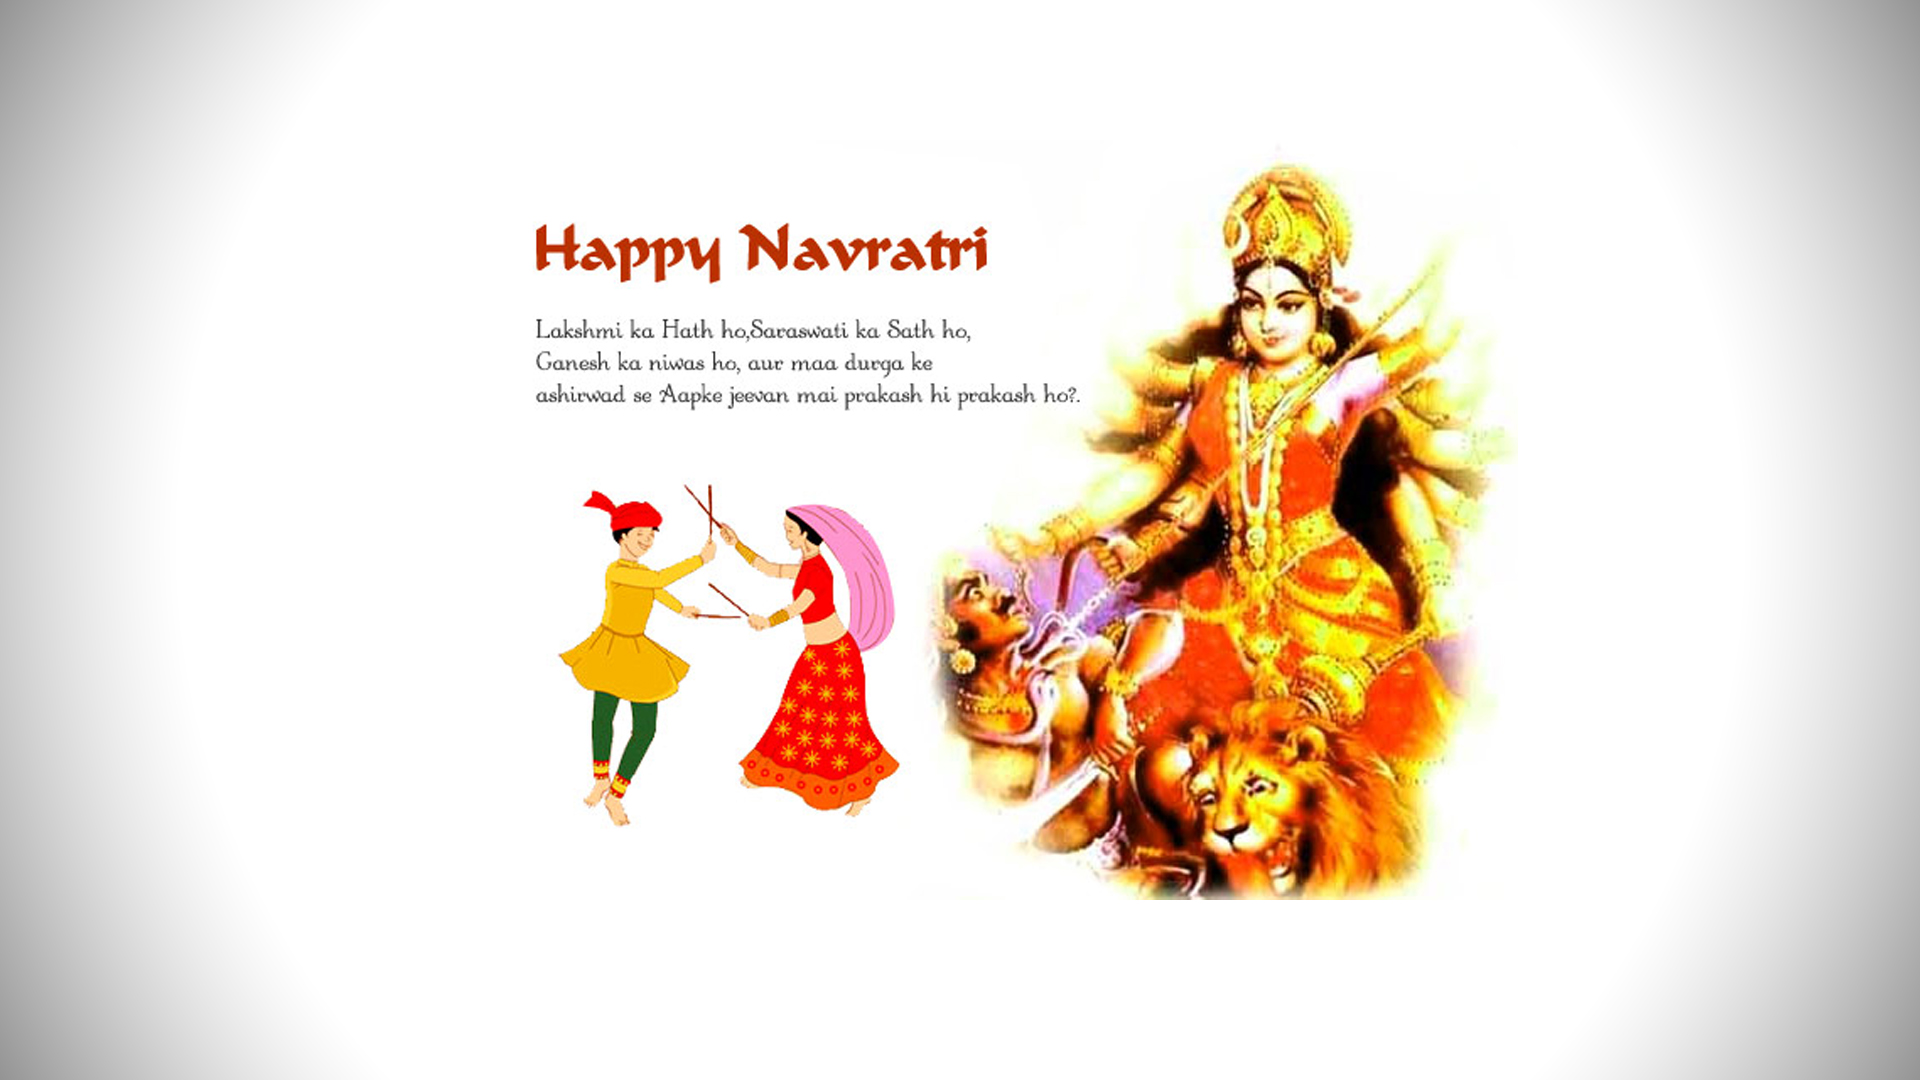 Navratri 2016 Celebrations - The 9 Days of Durga Puja